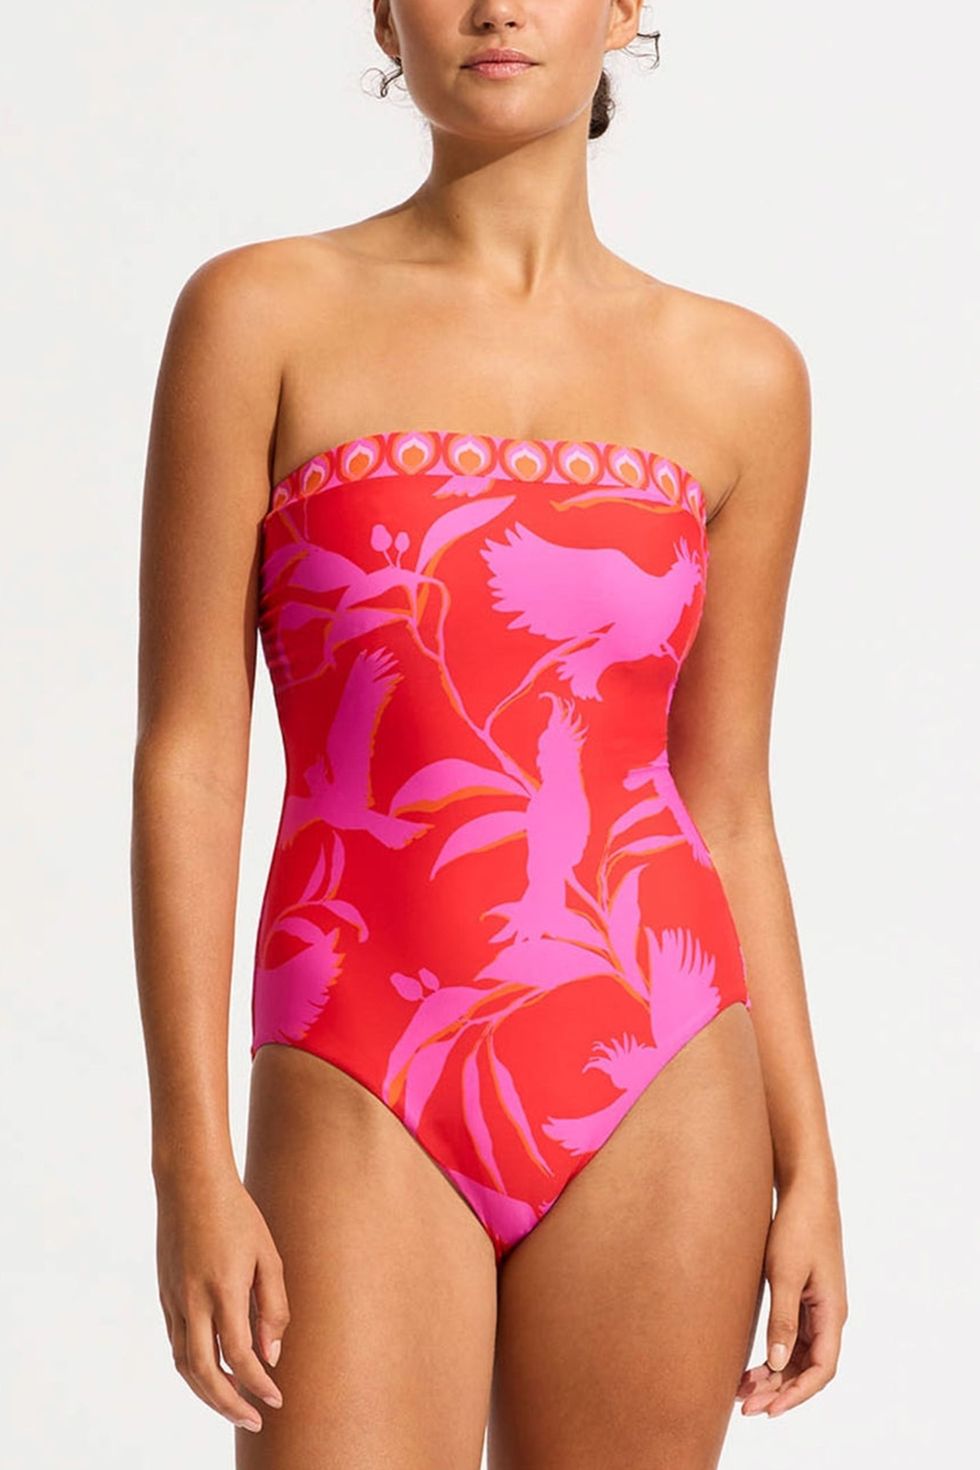 Designer Bandeau One Piece Swimwear, Luxury Strapless Bathers